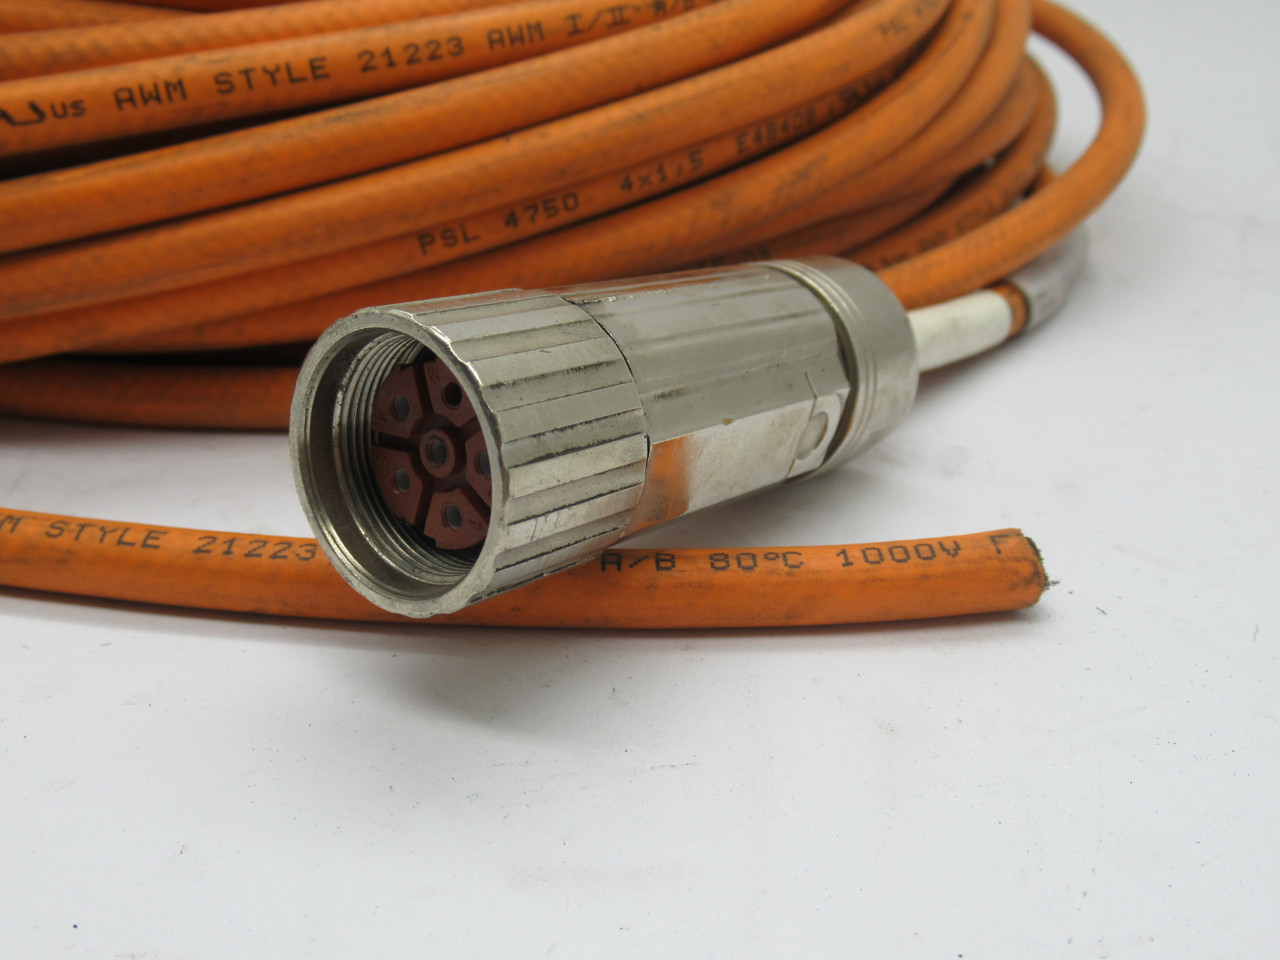 Siemens SP6FX80025CS011CE0 Servo Cable 20M *Cut* USED